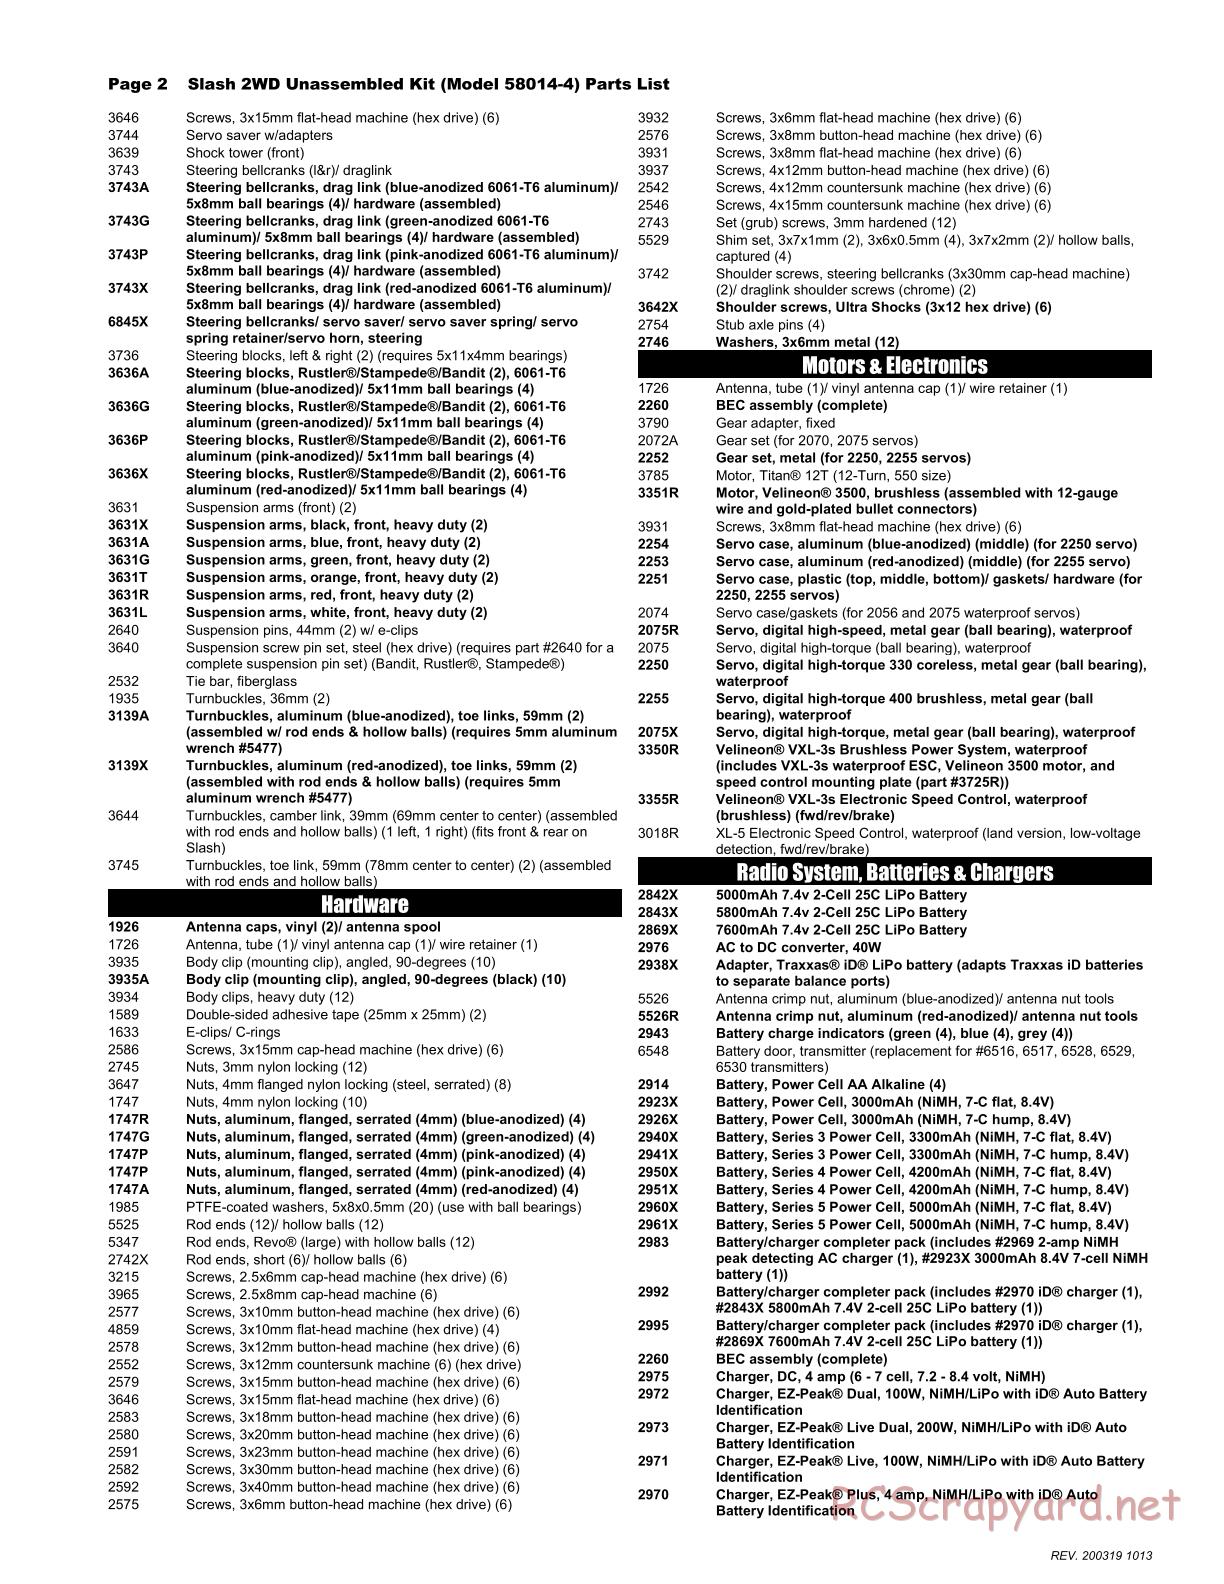 Traxxas - Slash 2WD - Parts List - Page 2